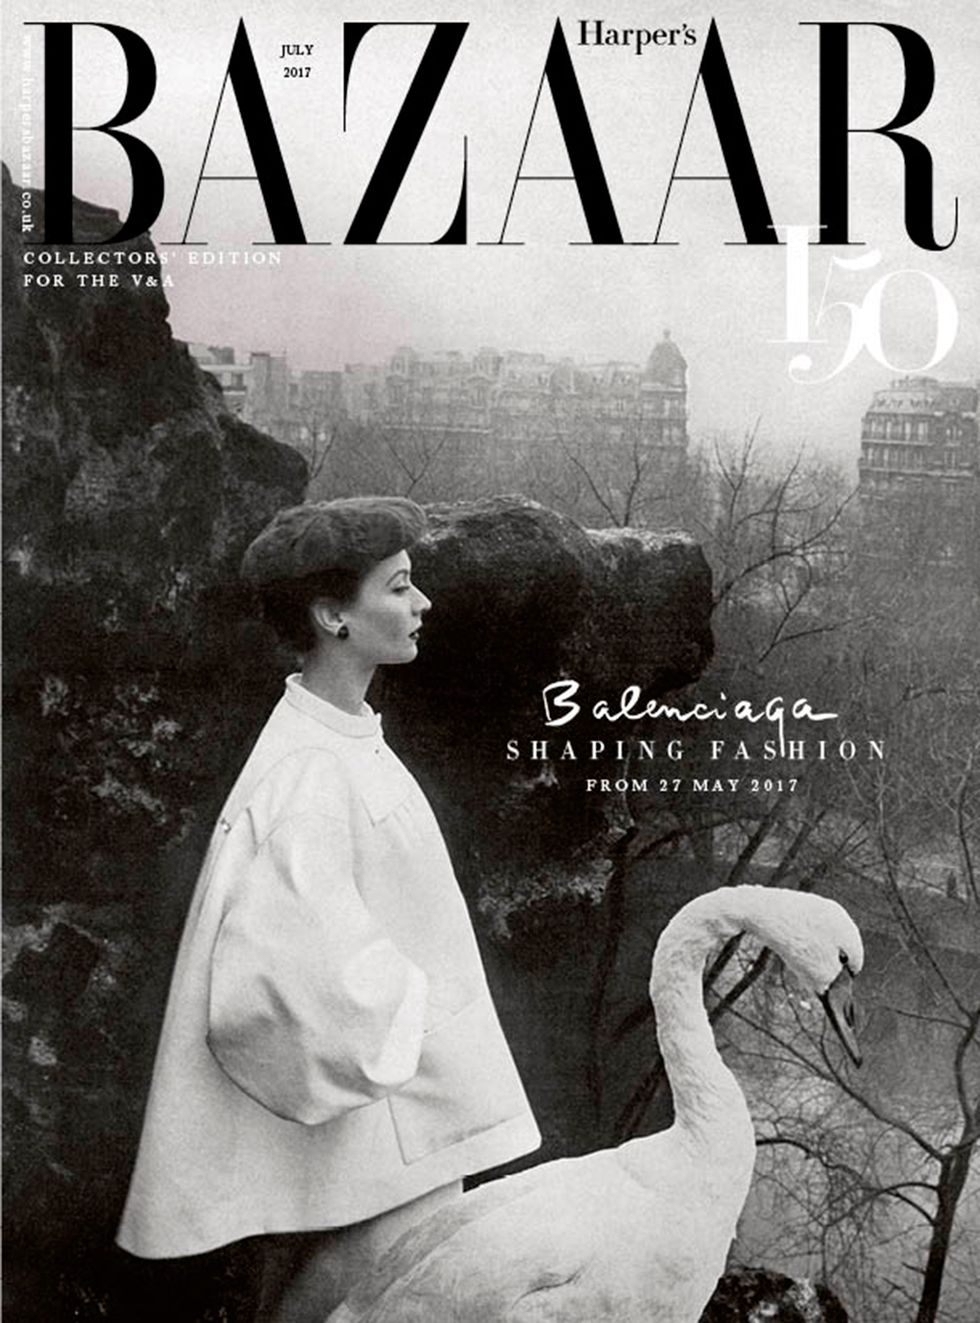 Balenciaga cover July issue Harper's Bazaar